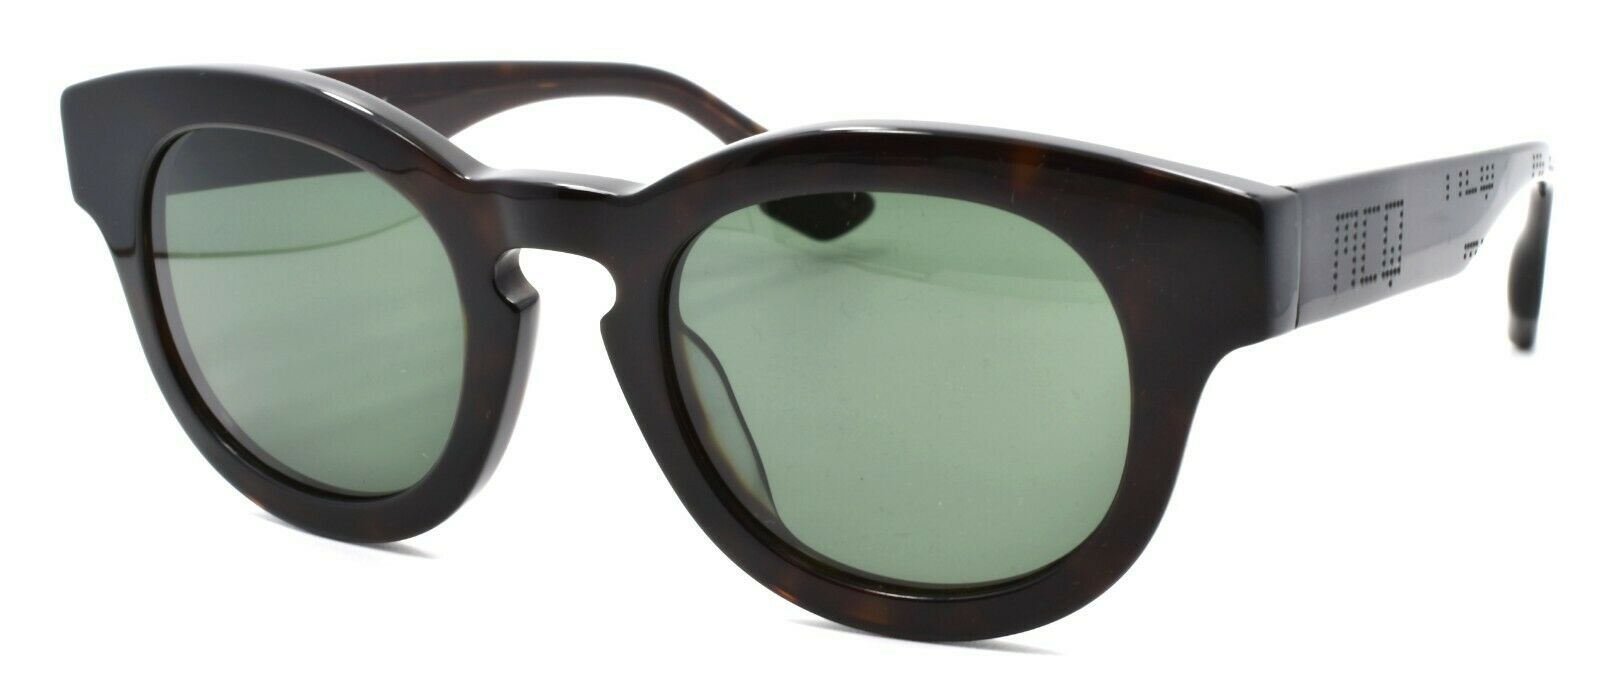 1-McQ Alexander McQueen MQ0047S 002 Unisex Sunglasses Round Havana / Green Lens-889652032276-IKSpecs